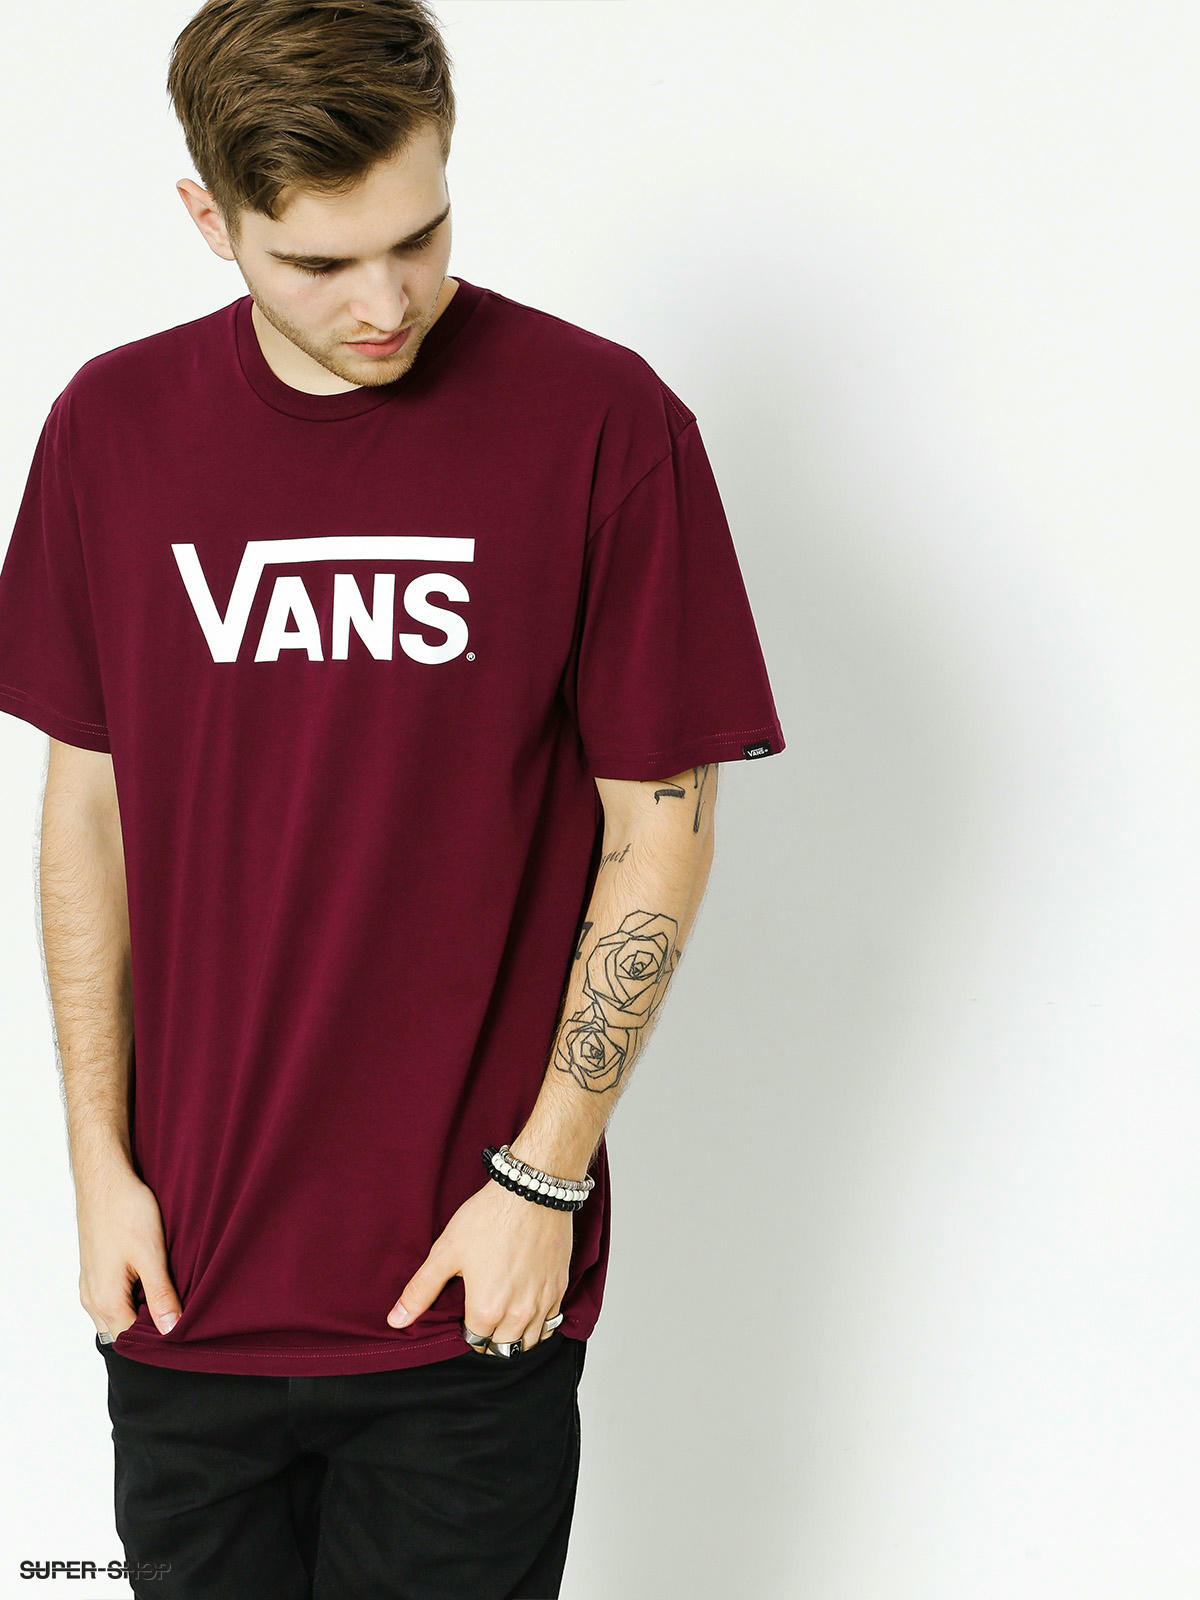 Vans T-shirt (burgundy/white)